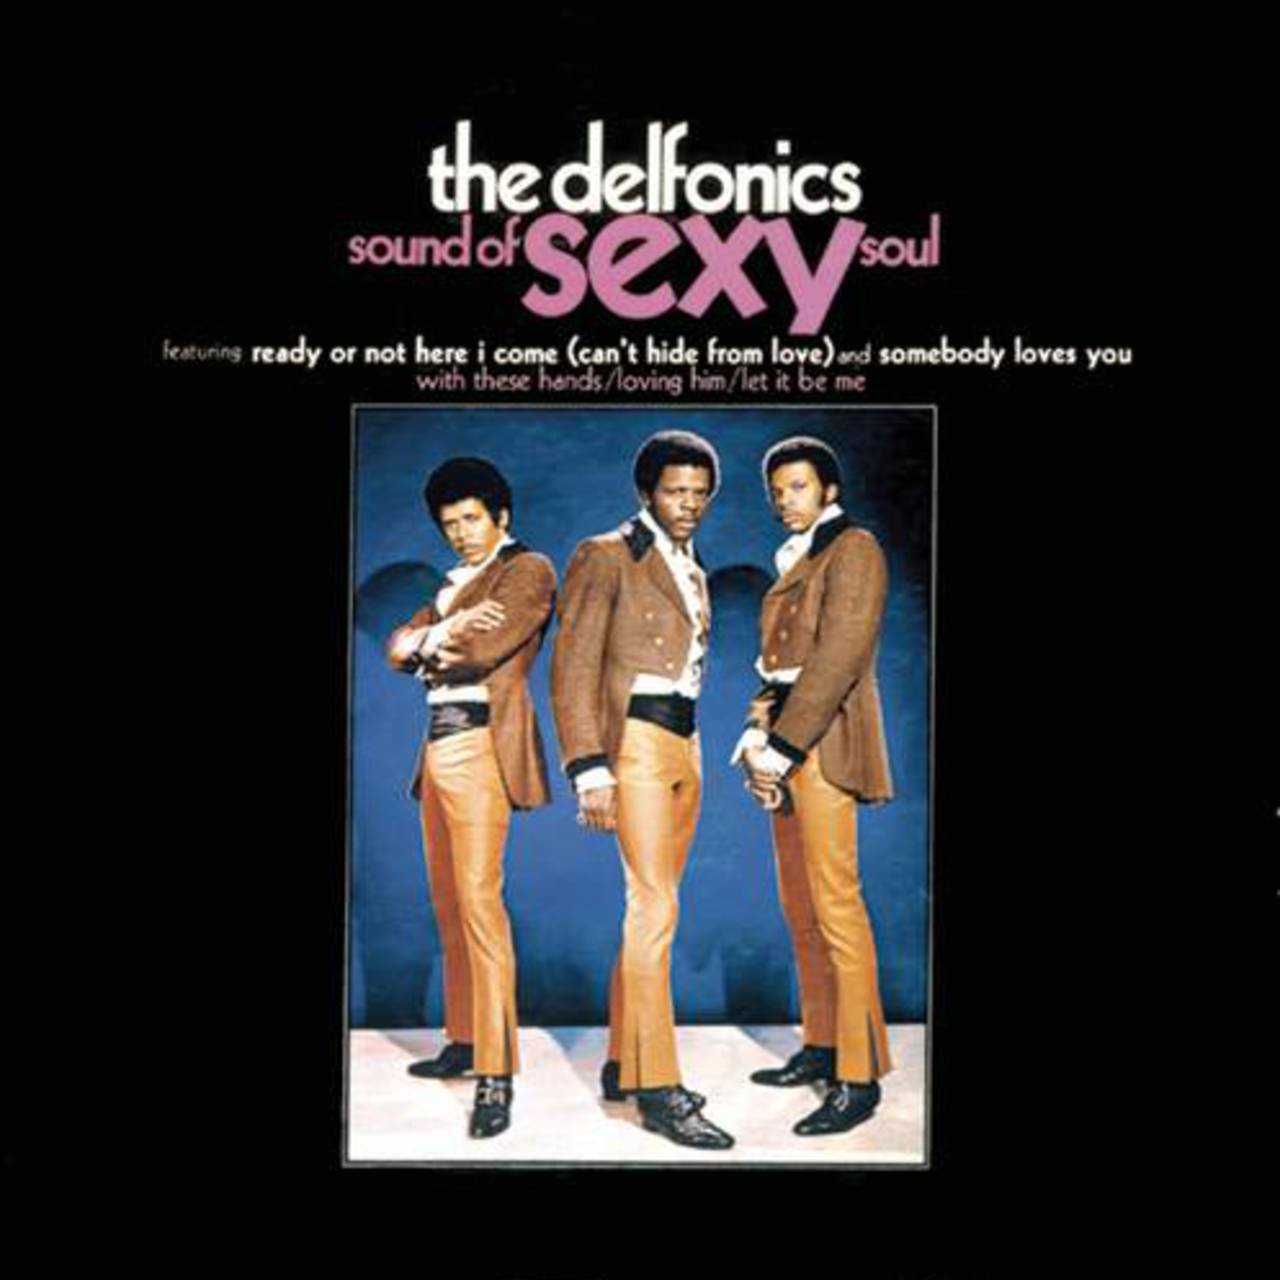 Delfonics greatest hits free download mp3